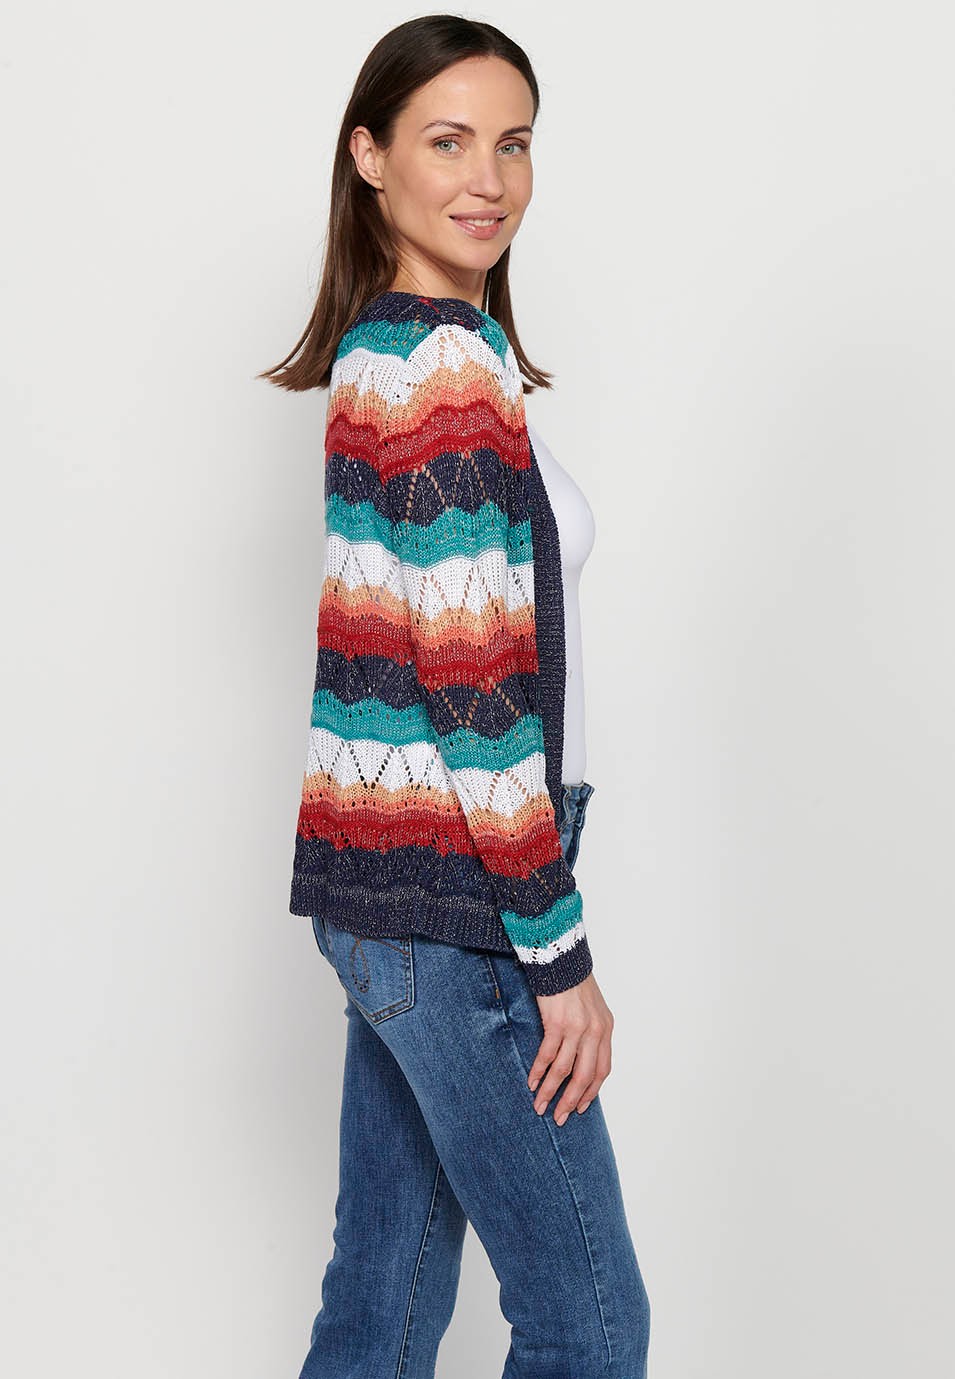 Tricot calado de manga larga, rayas multicolor para mujer